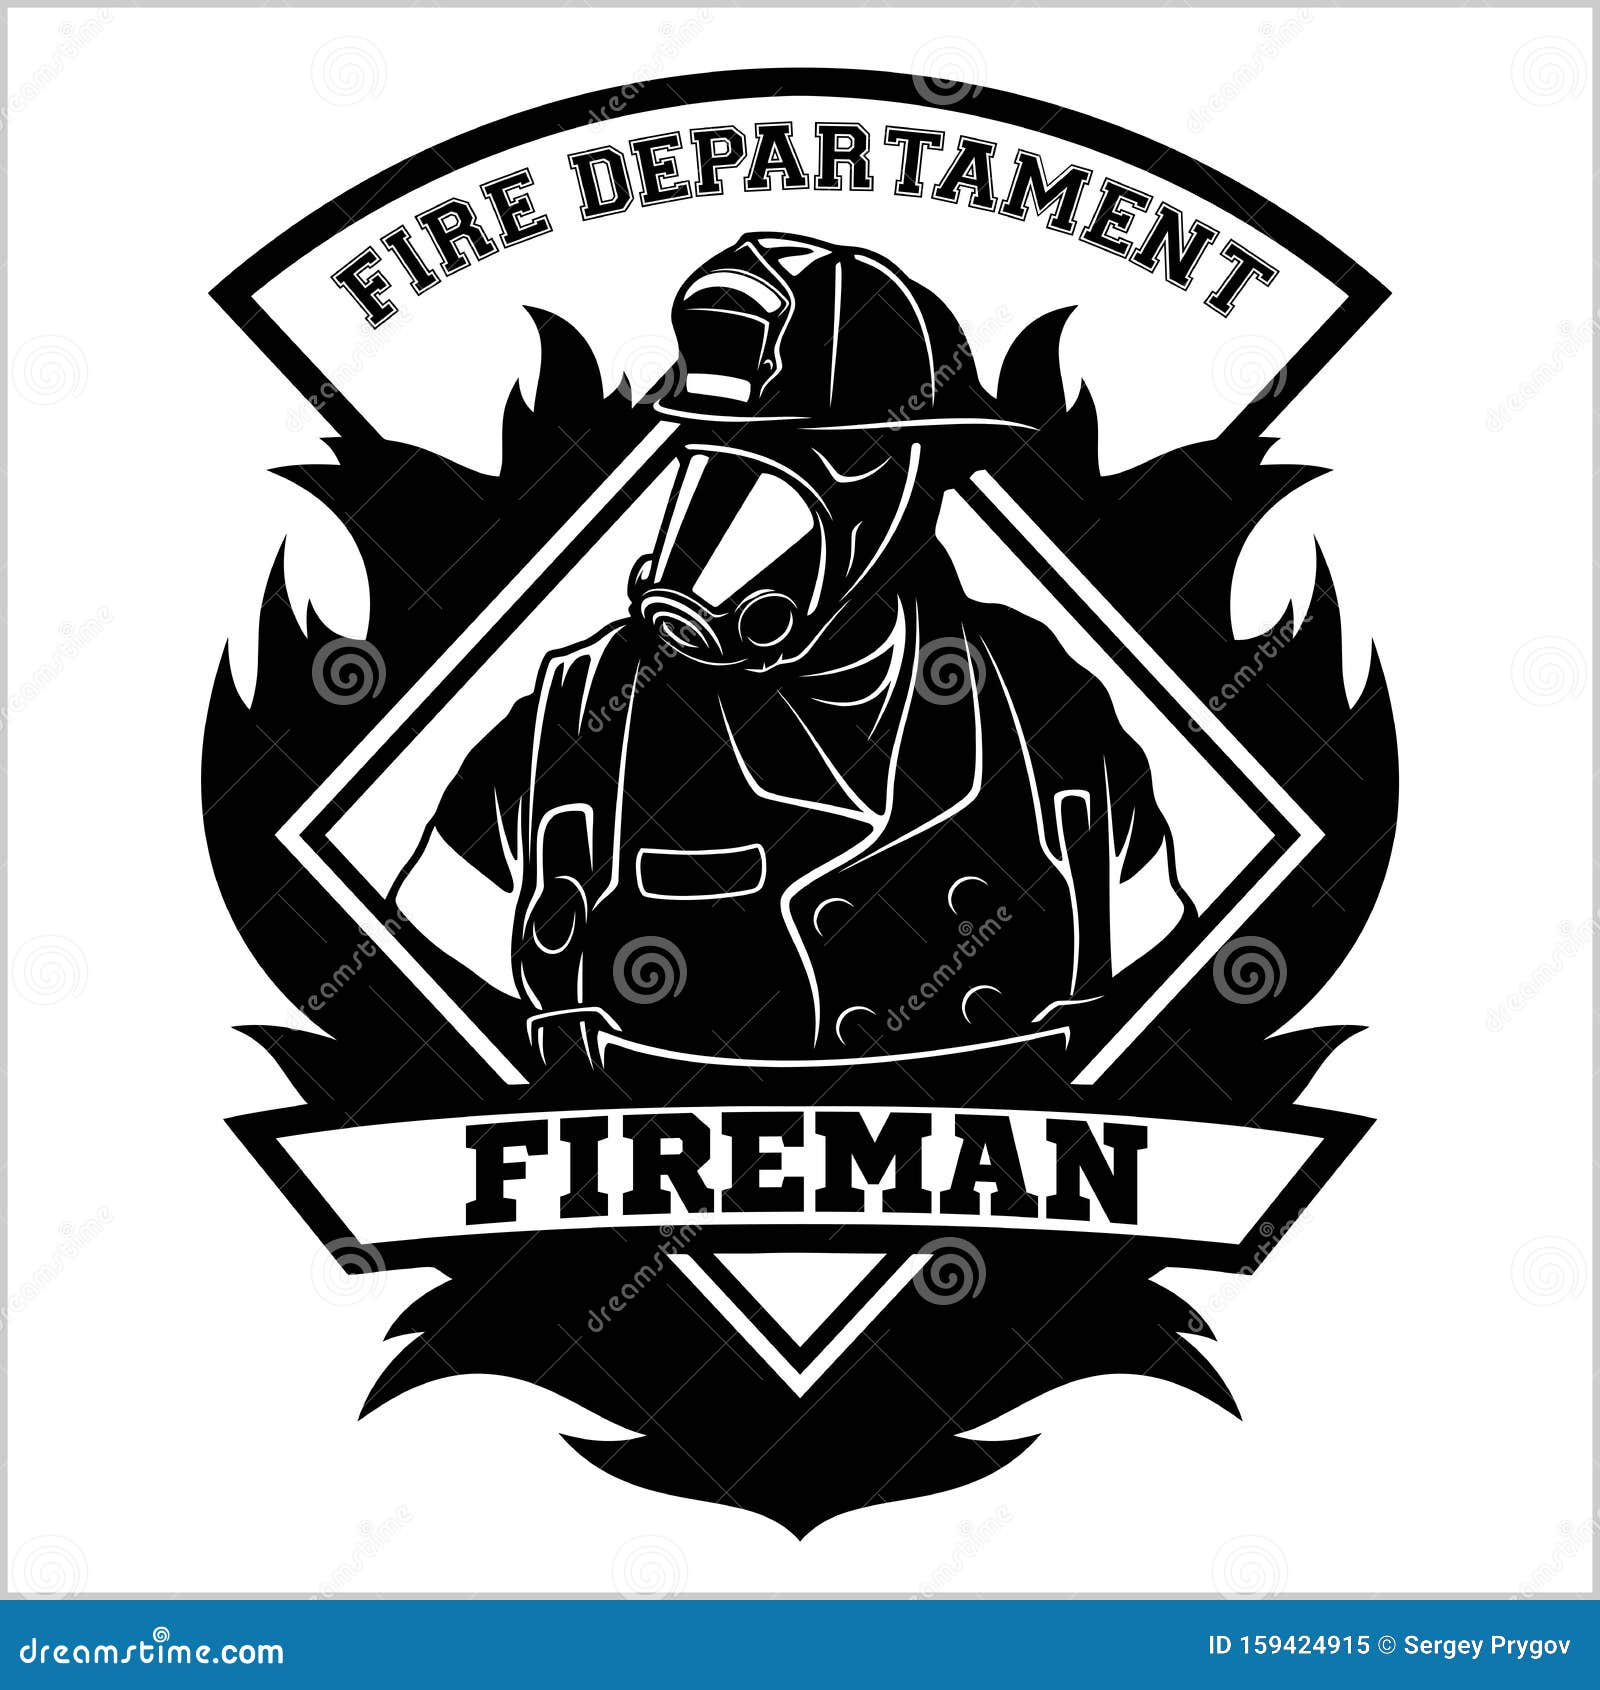 fire department emblem - badge, logo on white background -  .